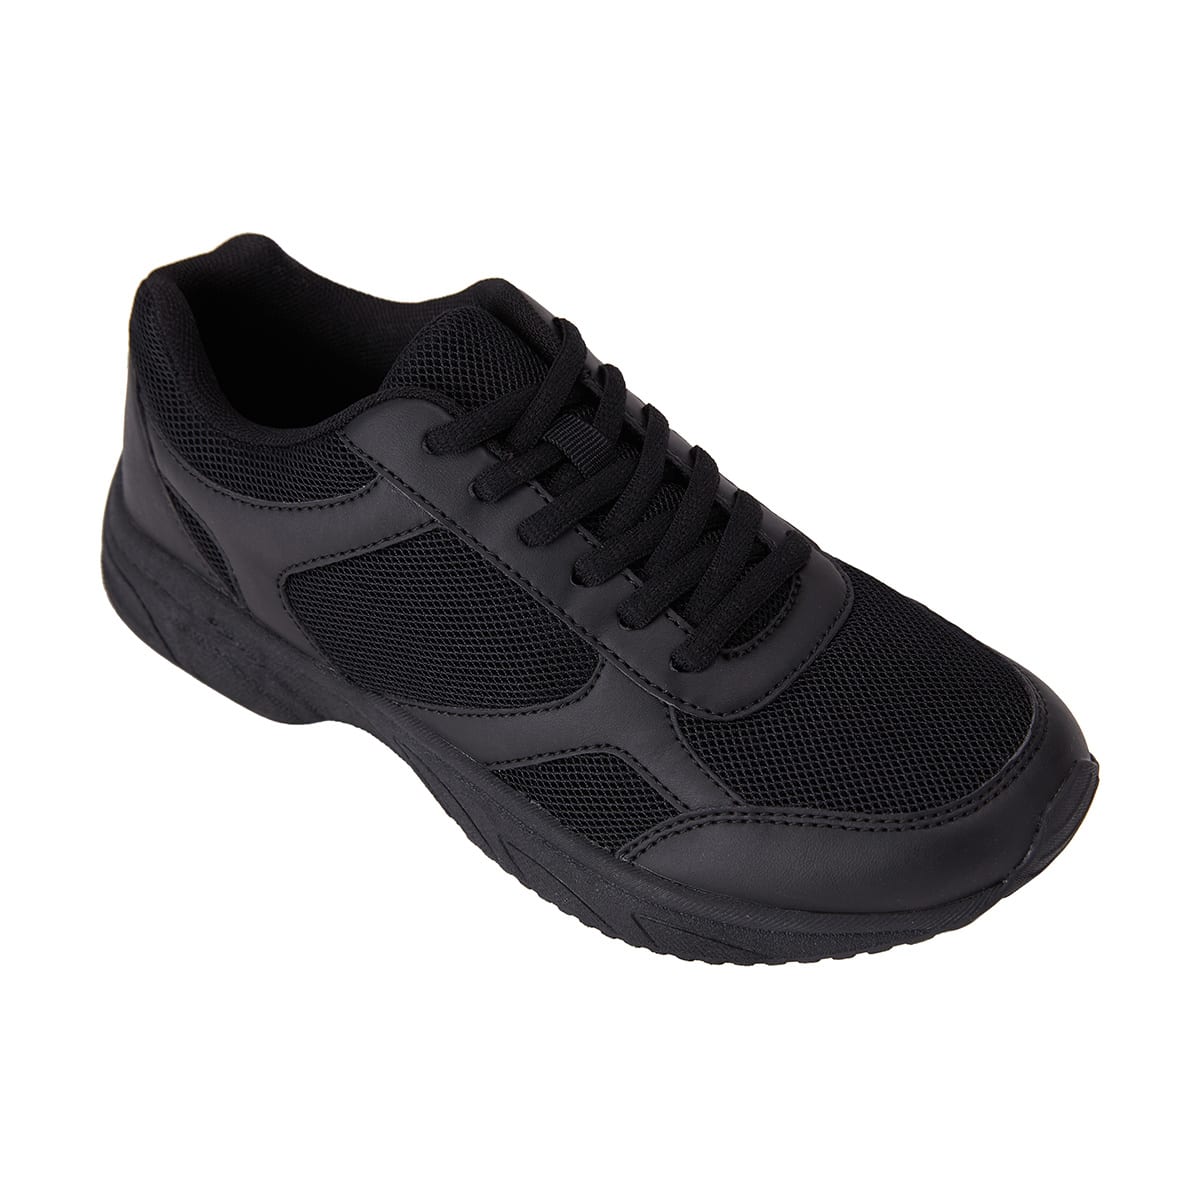 Active Runner Shoes - Kmart